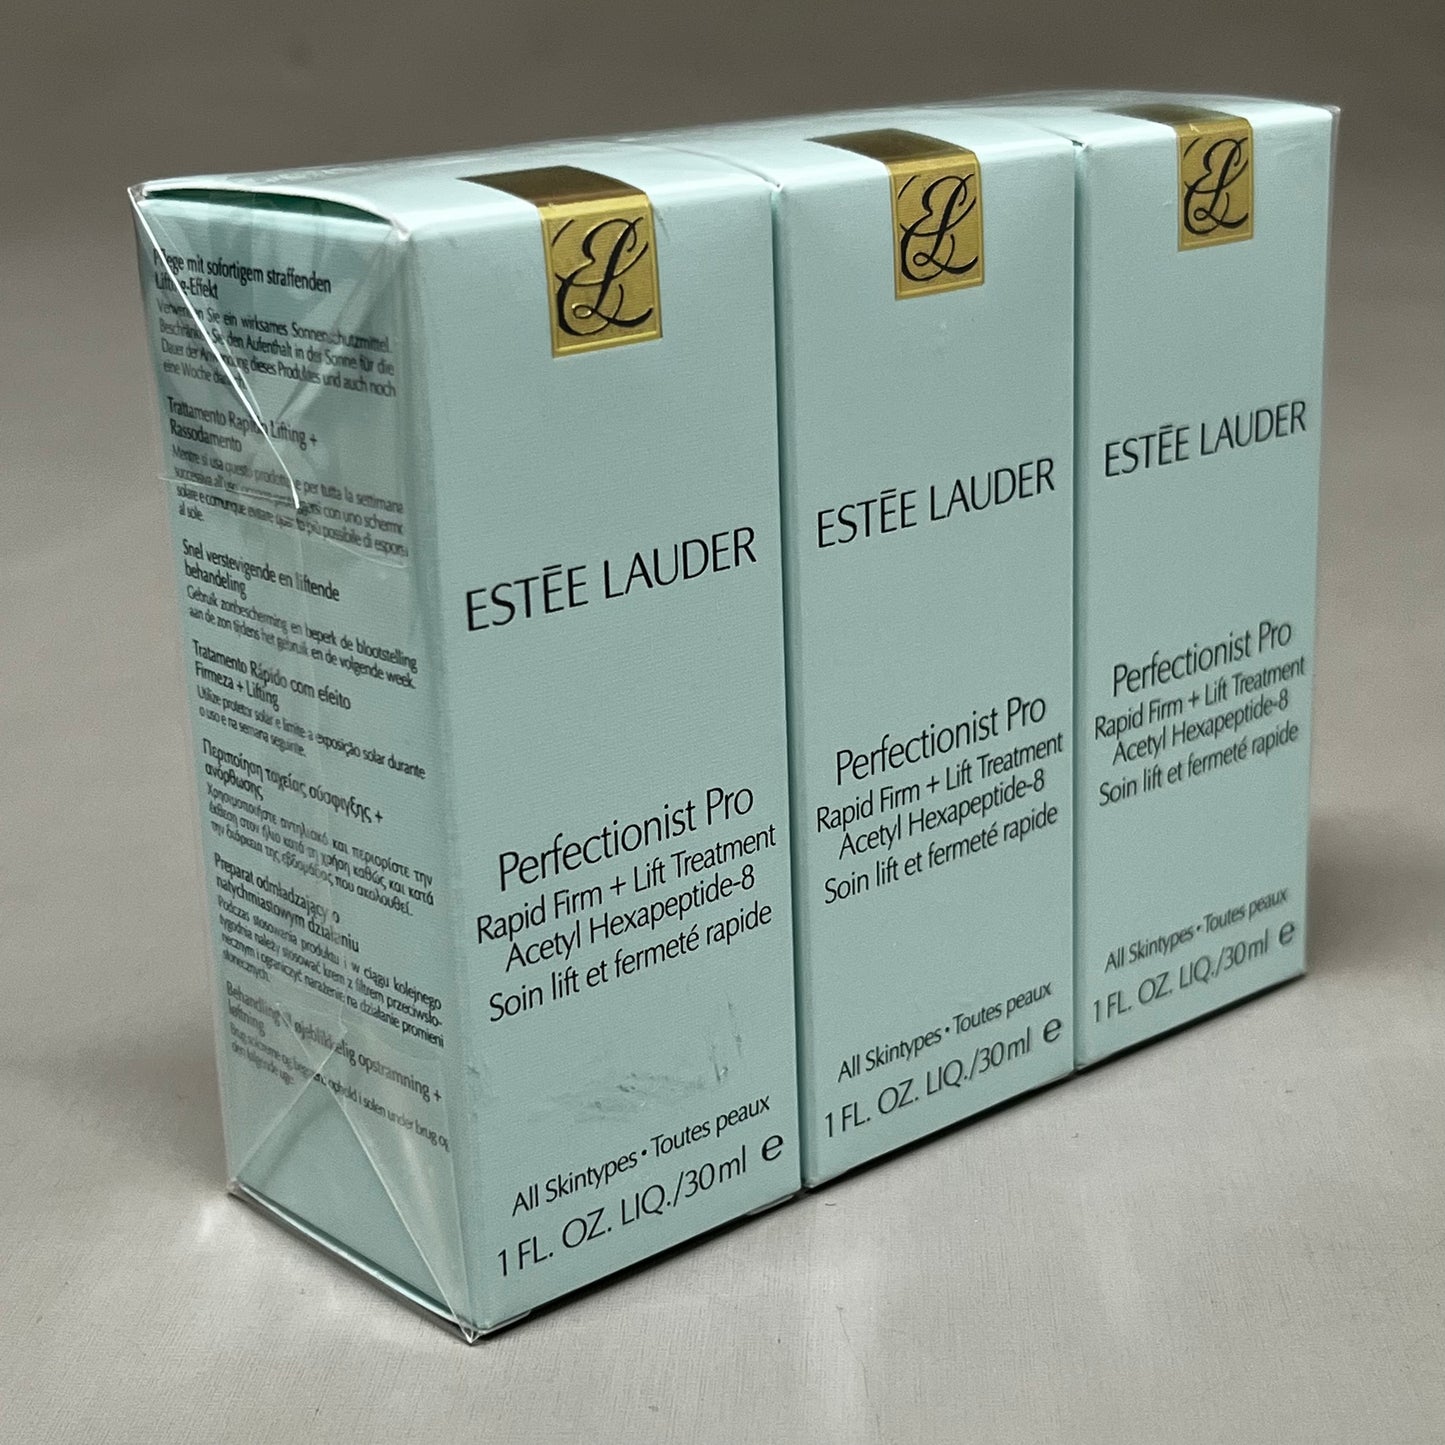 ESTEE LAUDER 3-PACK! Perfectionist Pro Rapid Firm Lift Treatment 1 FL. oz Blue (New)